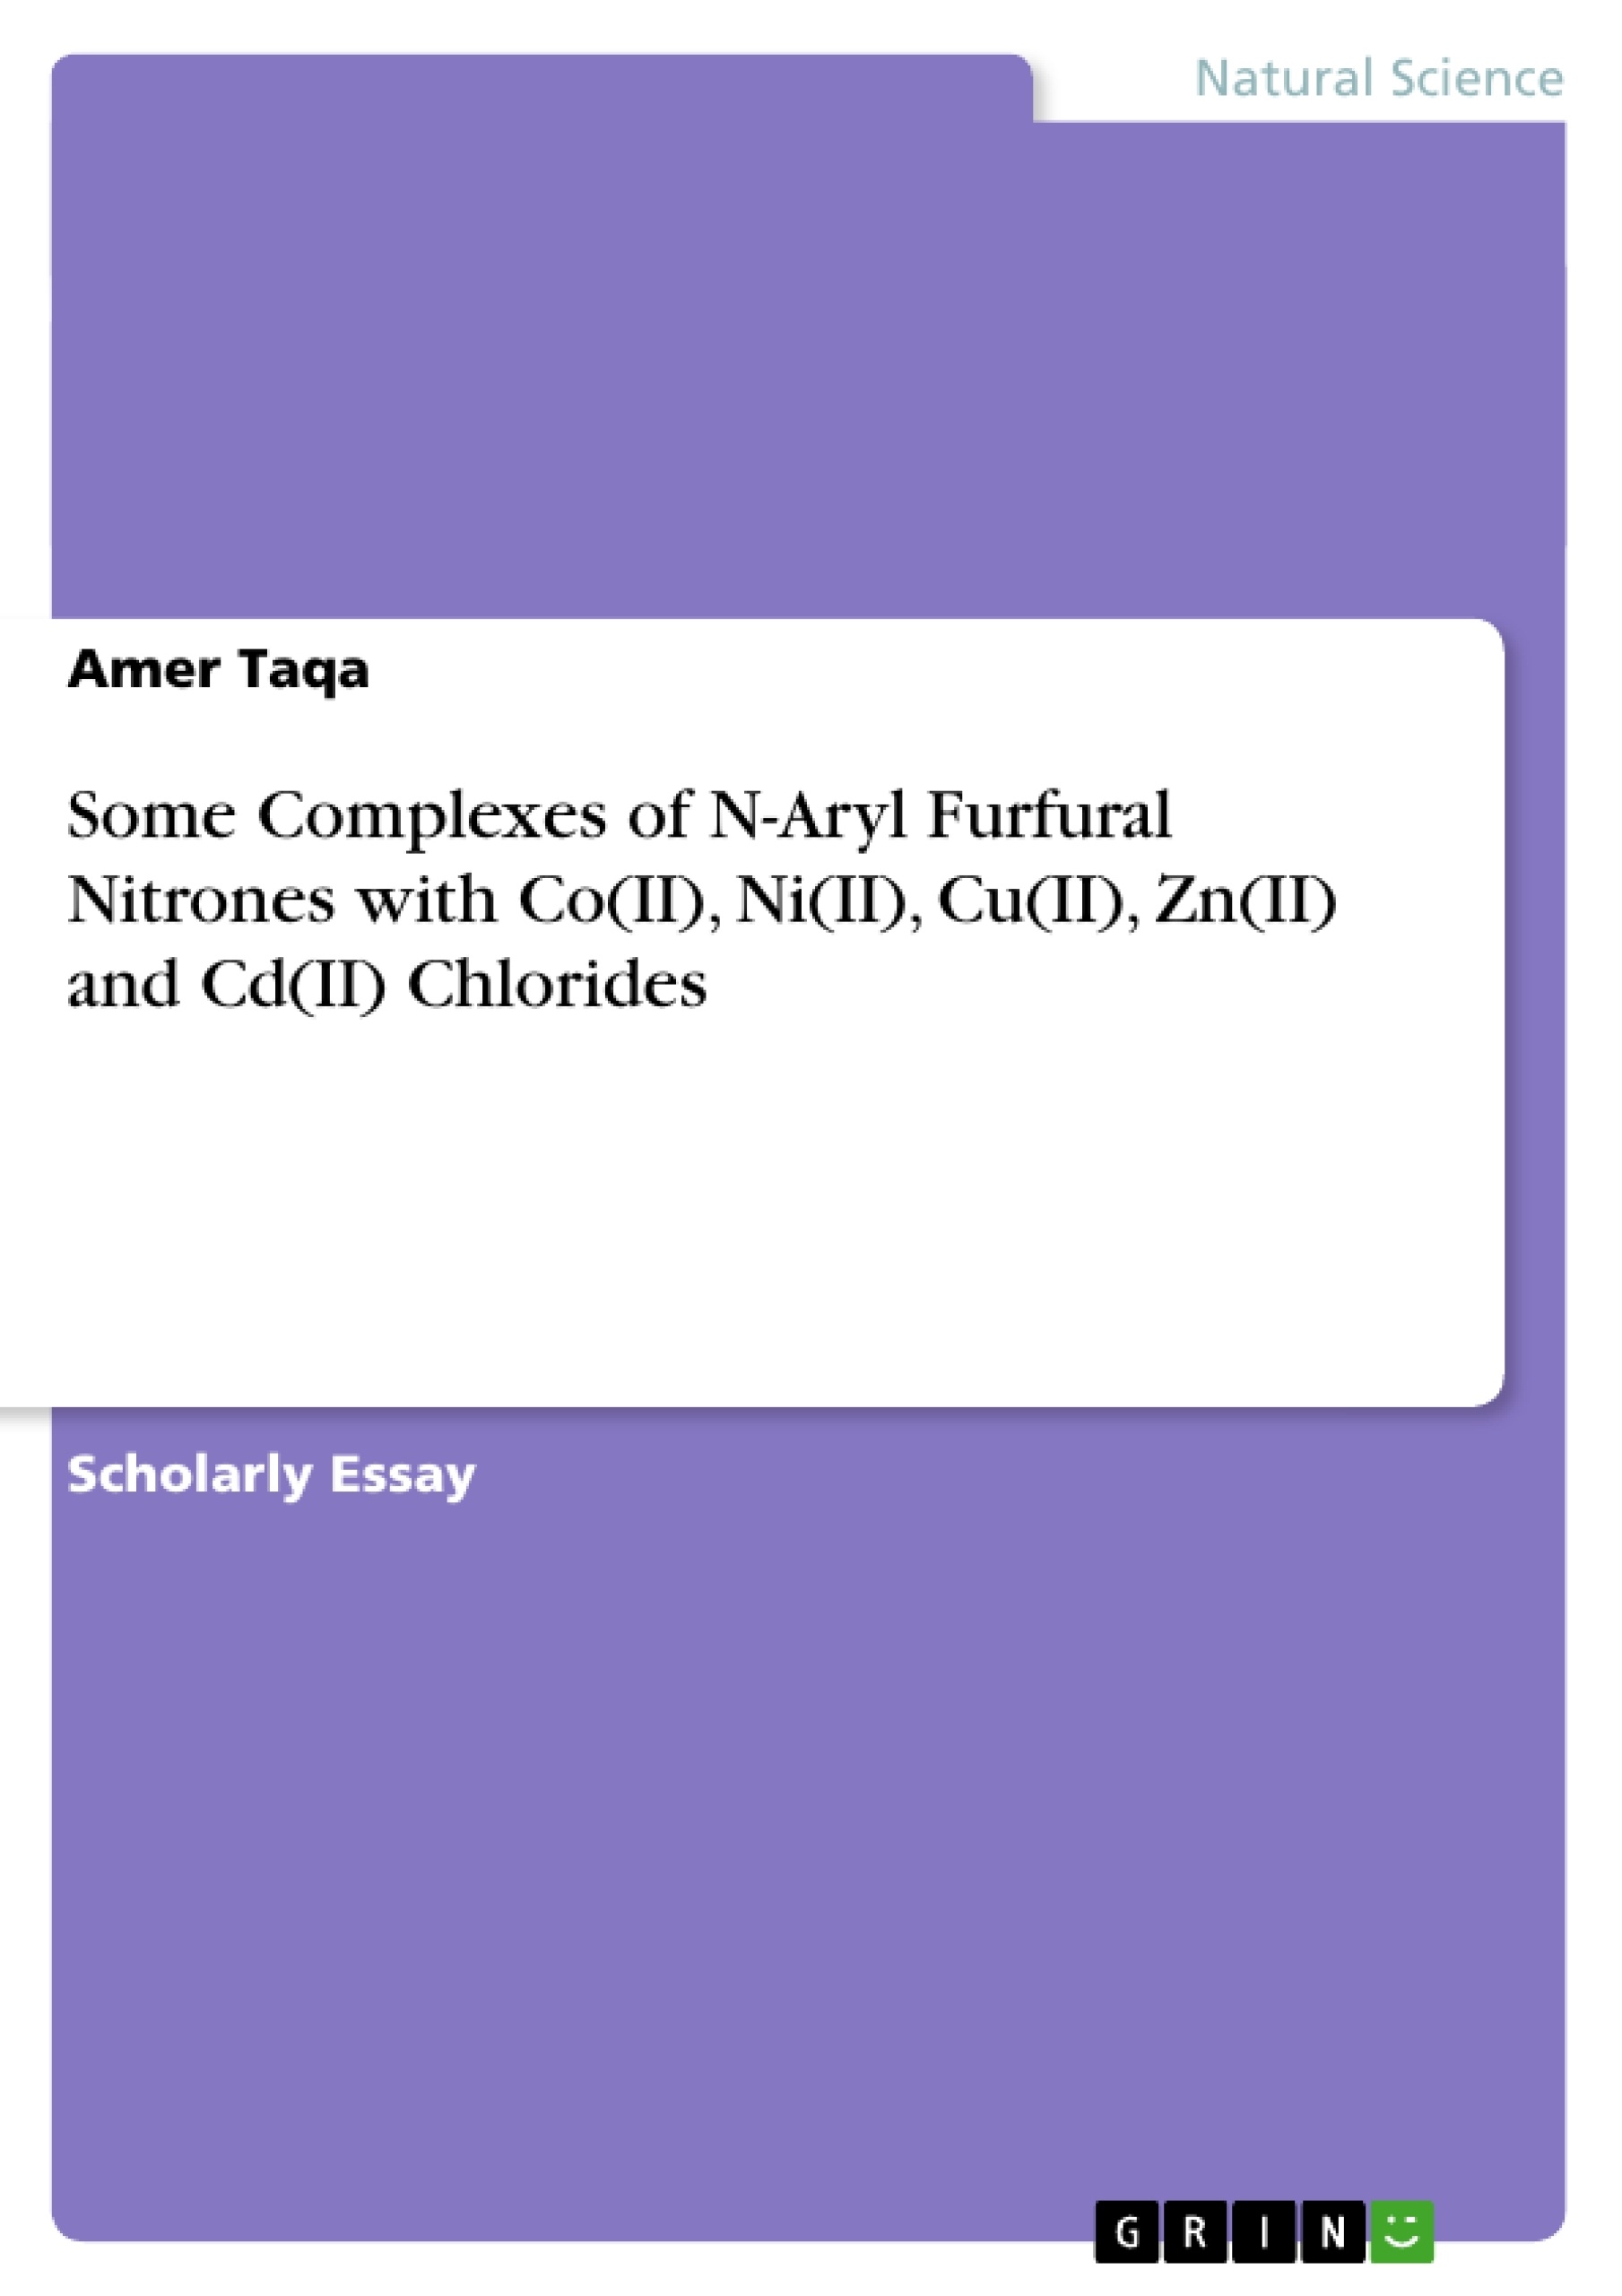 Titre: Some Complexes of N-Aryl Furfural Nitrones with Co(II), Ni(II), Cu(II), Zn(II) and Cd(II) Chlorides